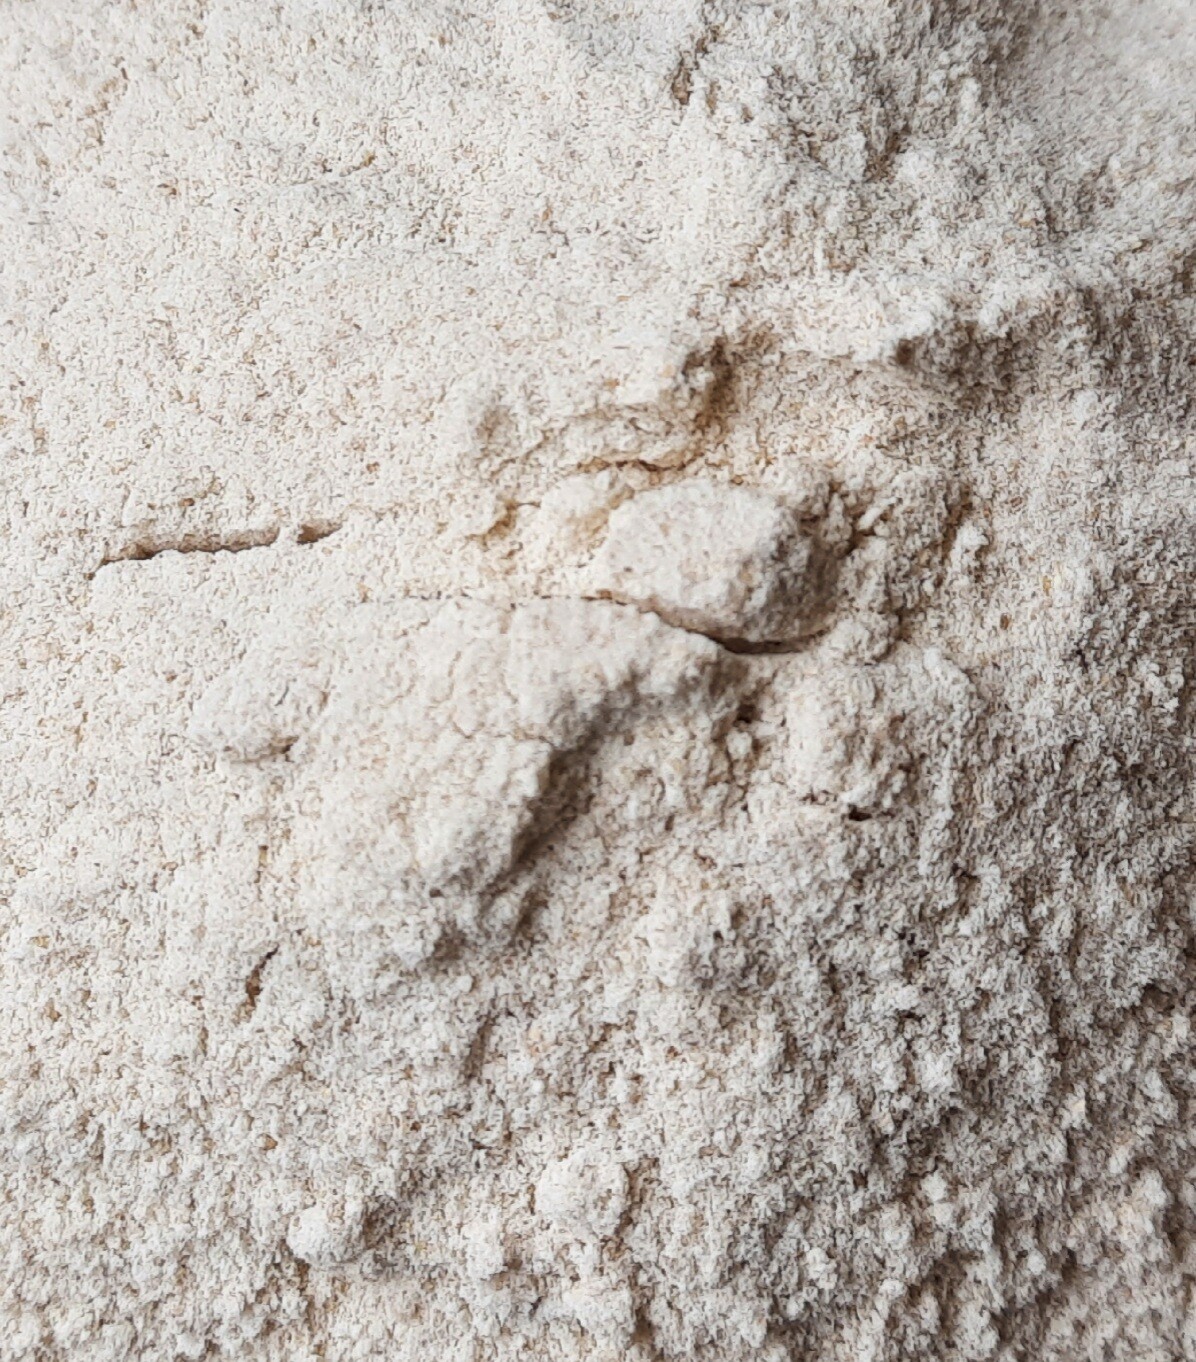 Jave Wheat Flour (ಜವೆ ಗೋಧಿ ಹಿಟ್ಟು)